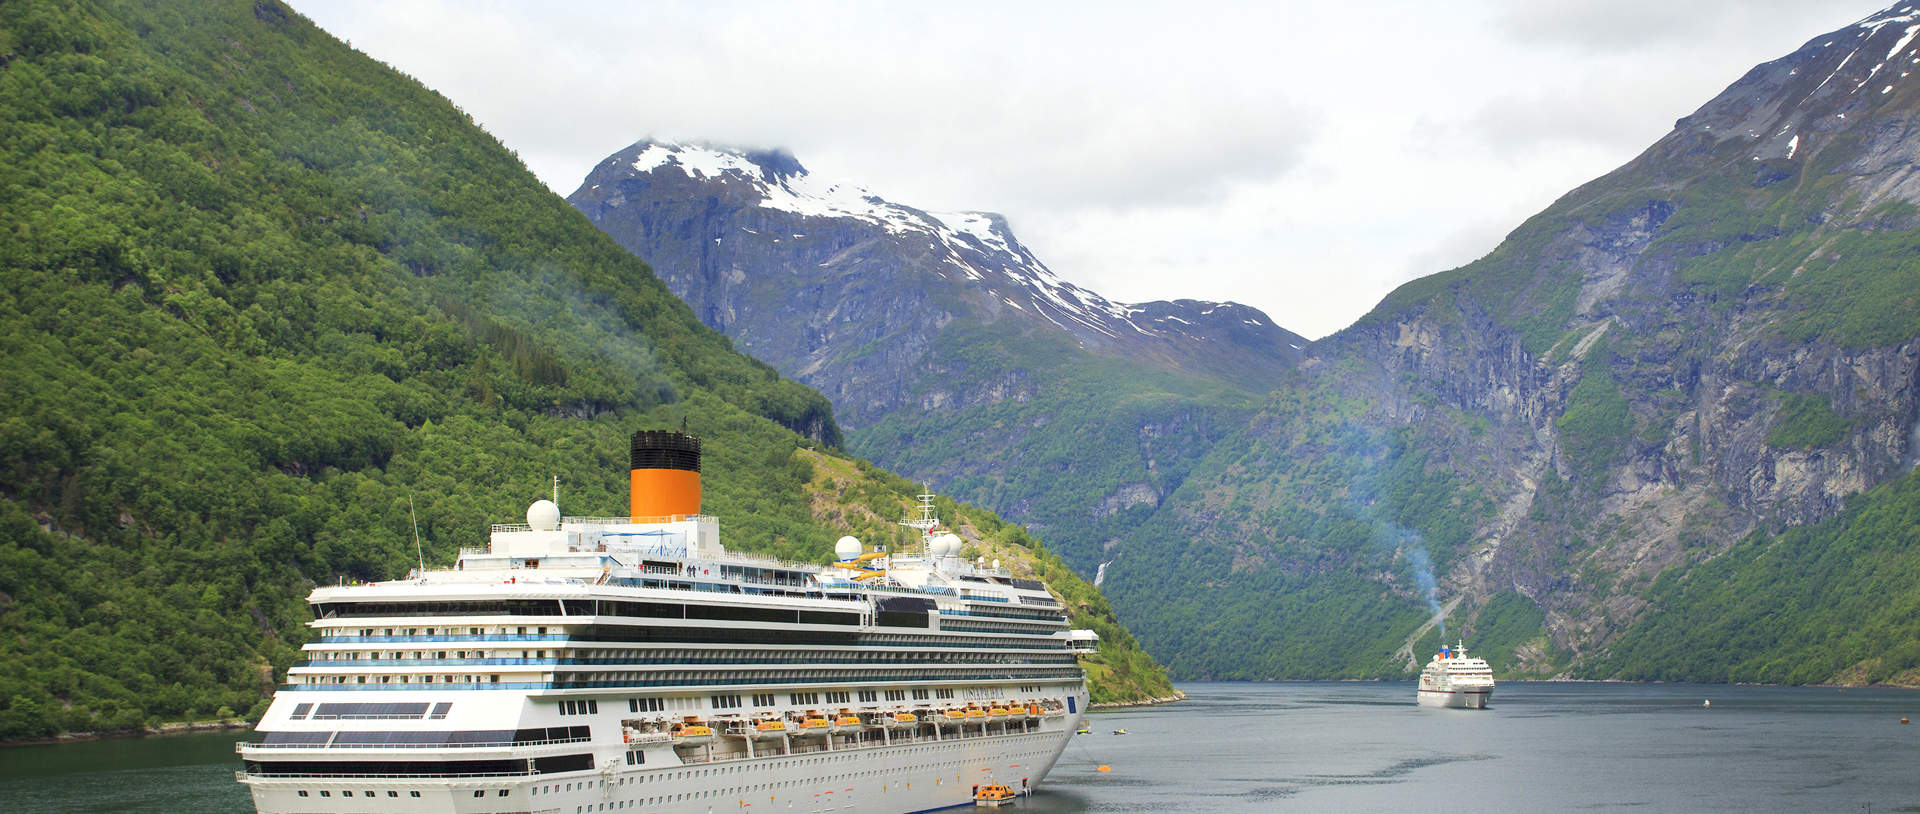 Cruise Ship In Geiranger Norway Coastline